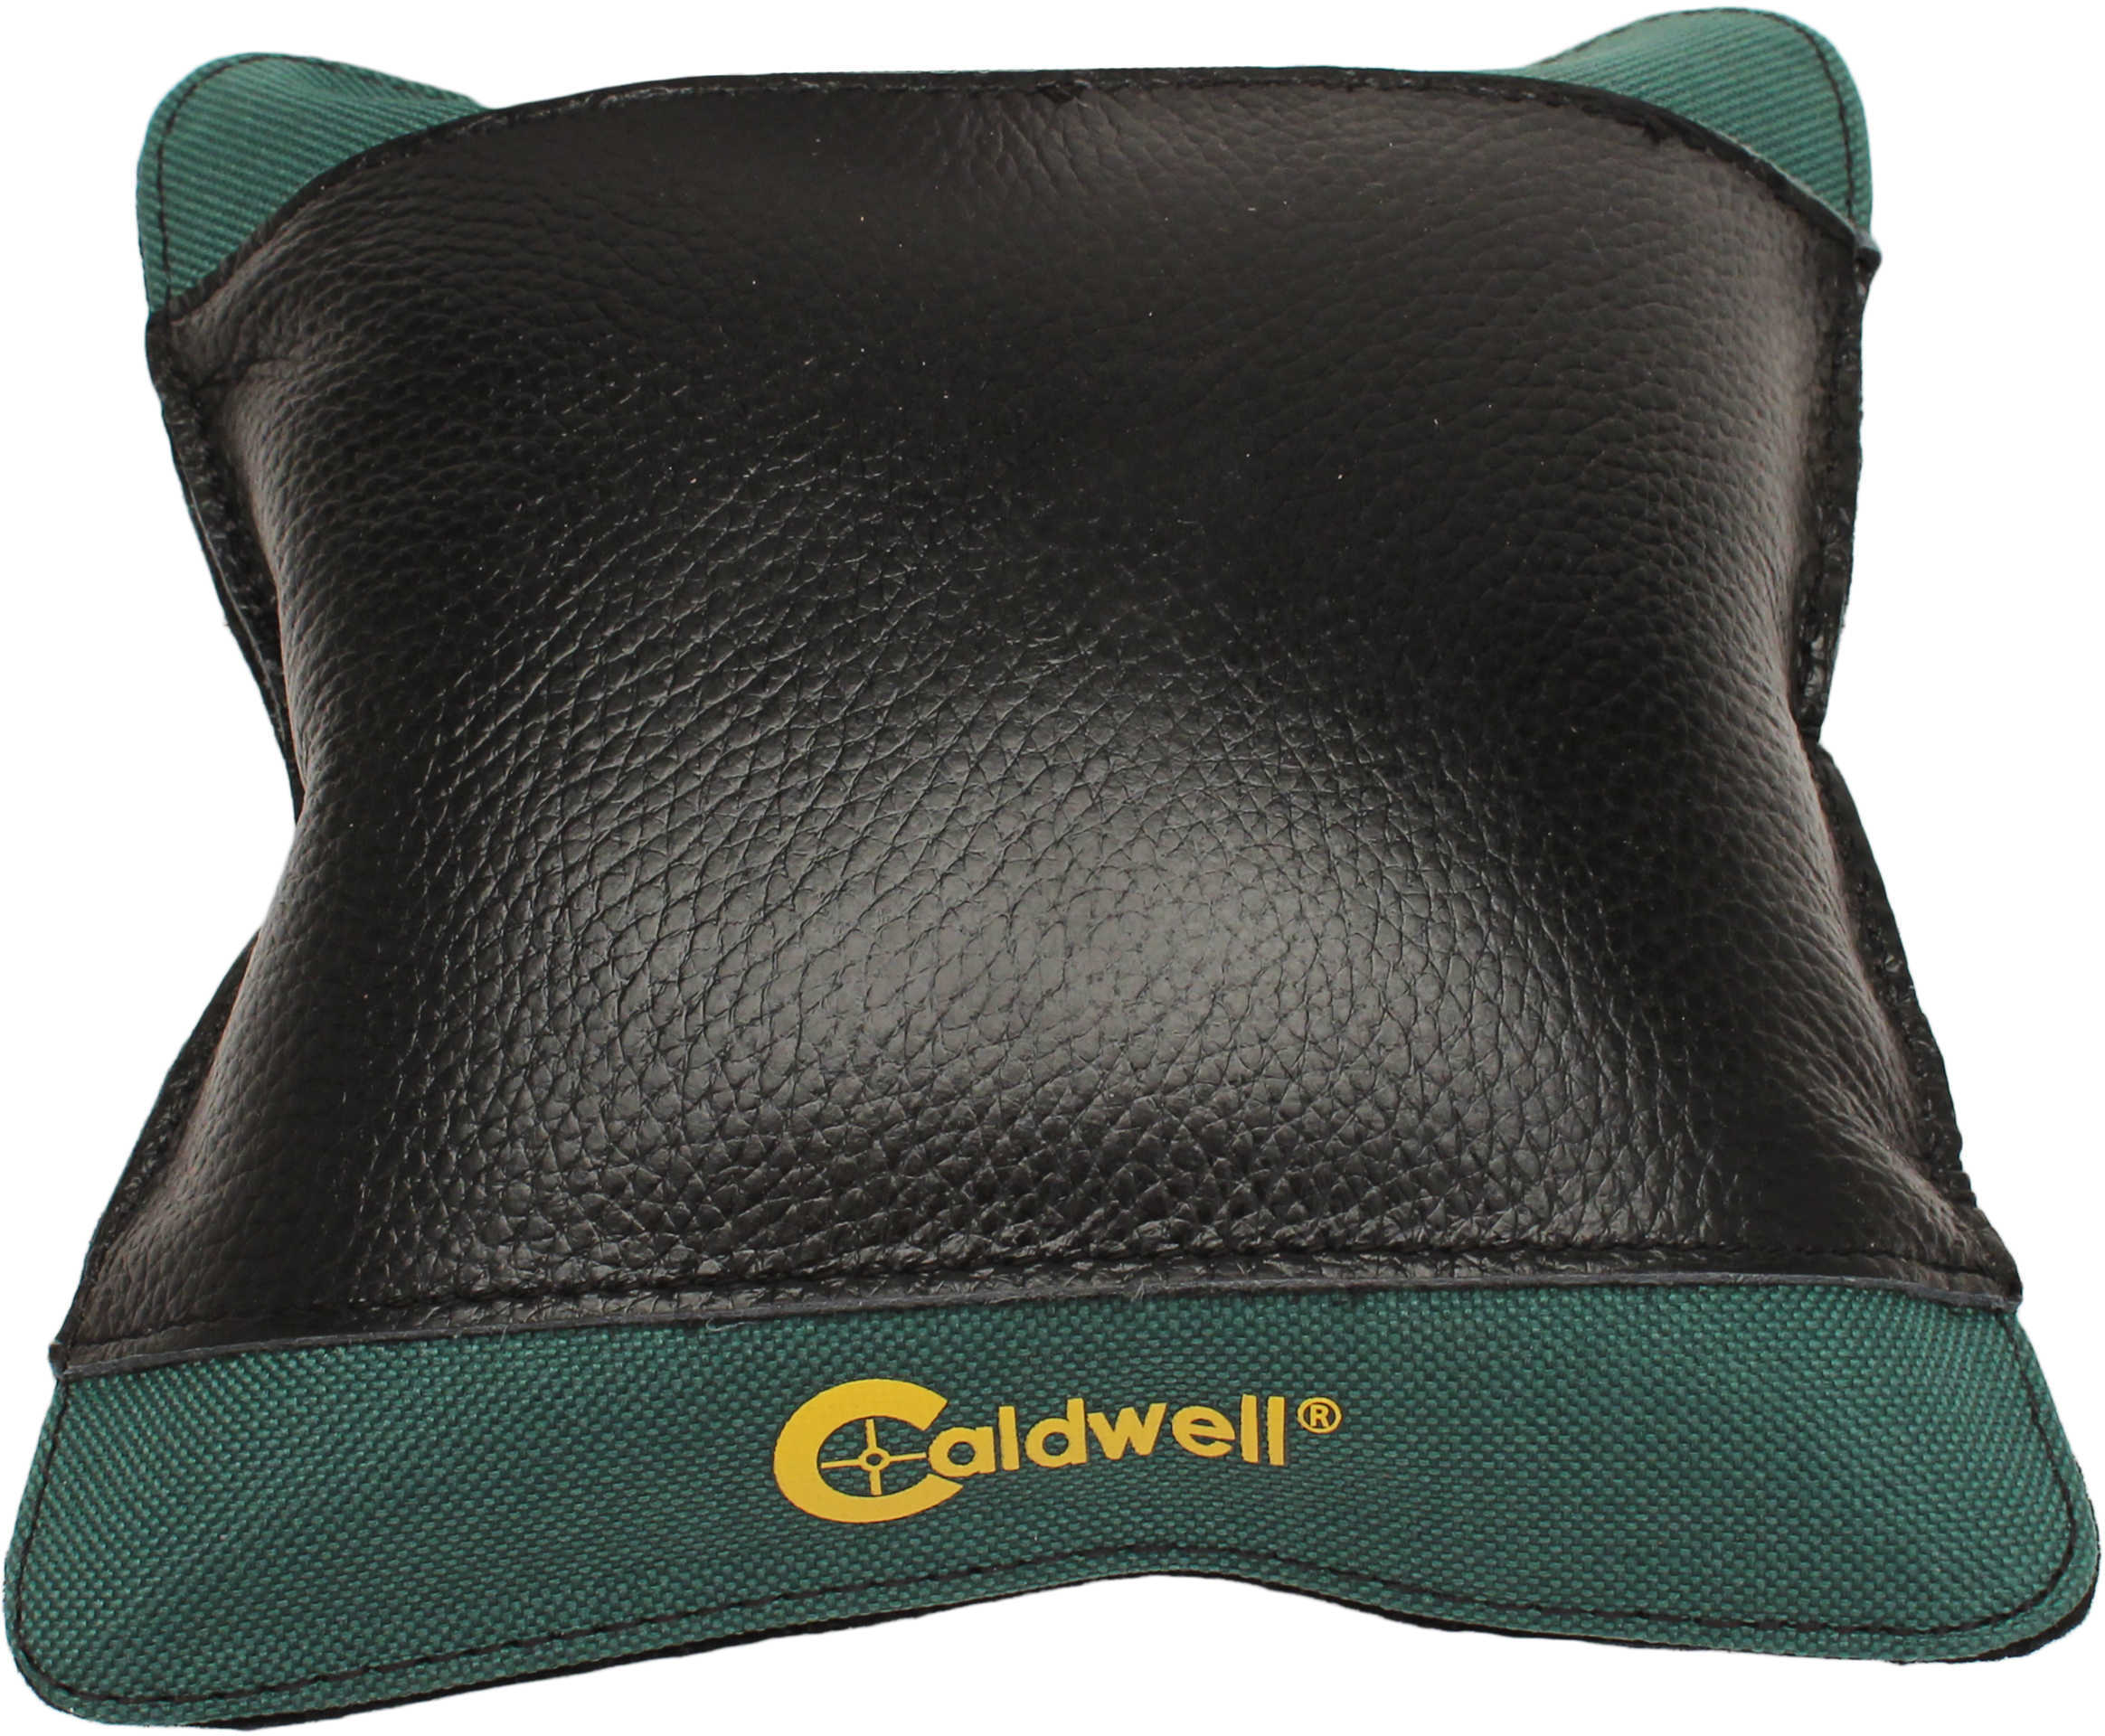 Caldwell Bench Bag No. 2 Filled 774317